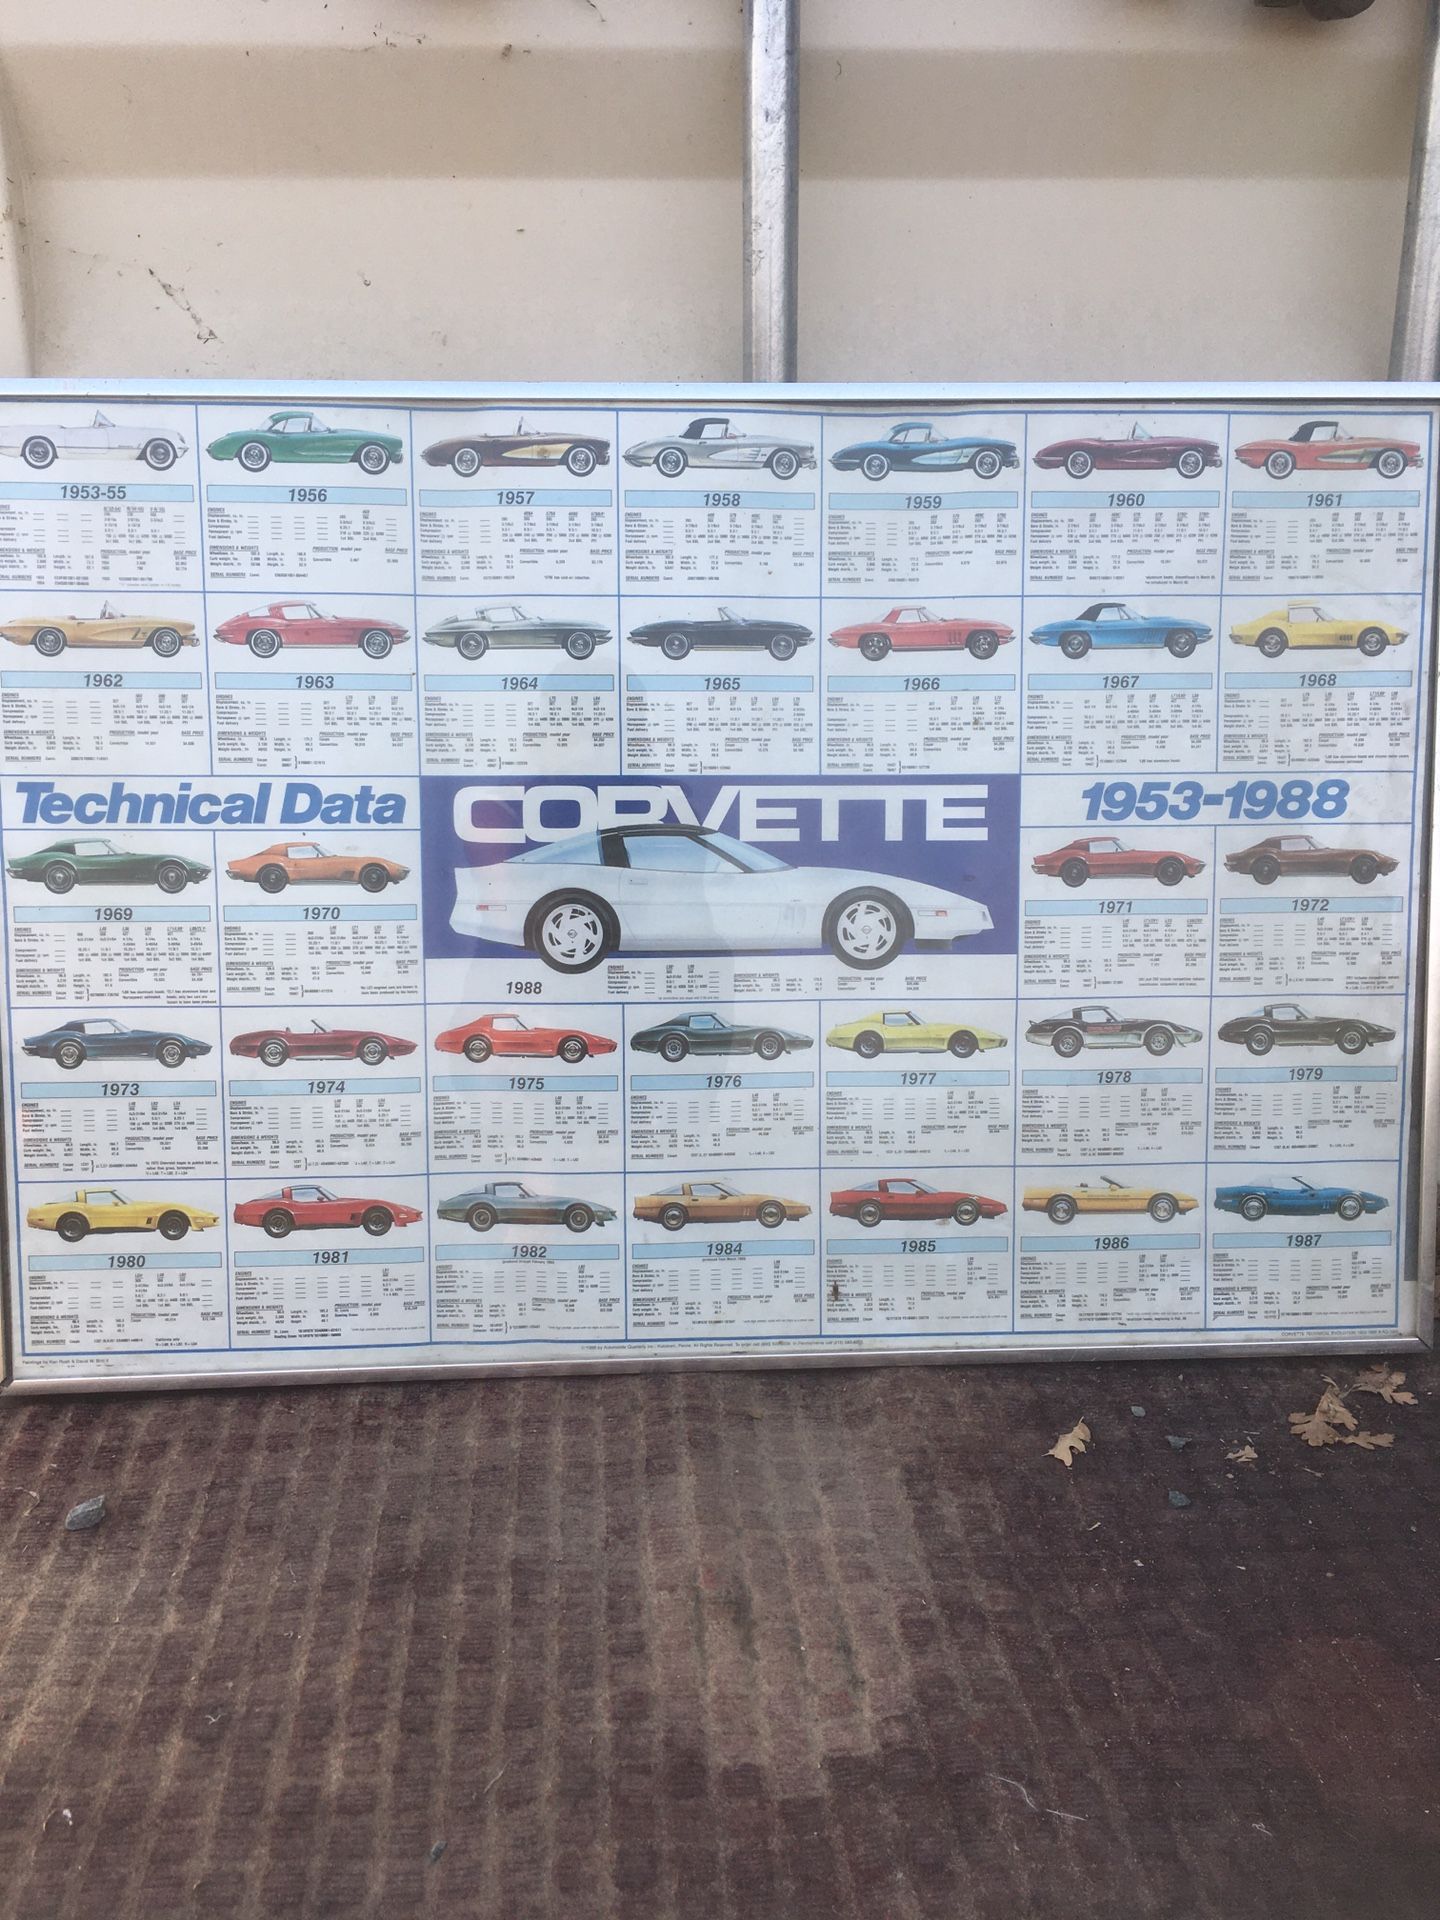 Corvette wall hanging 36x24.5